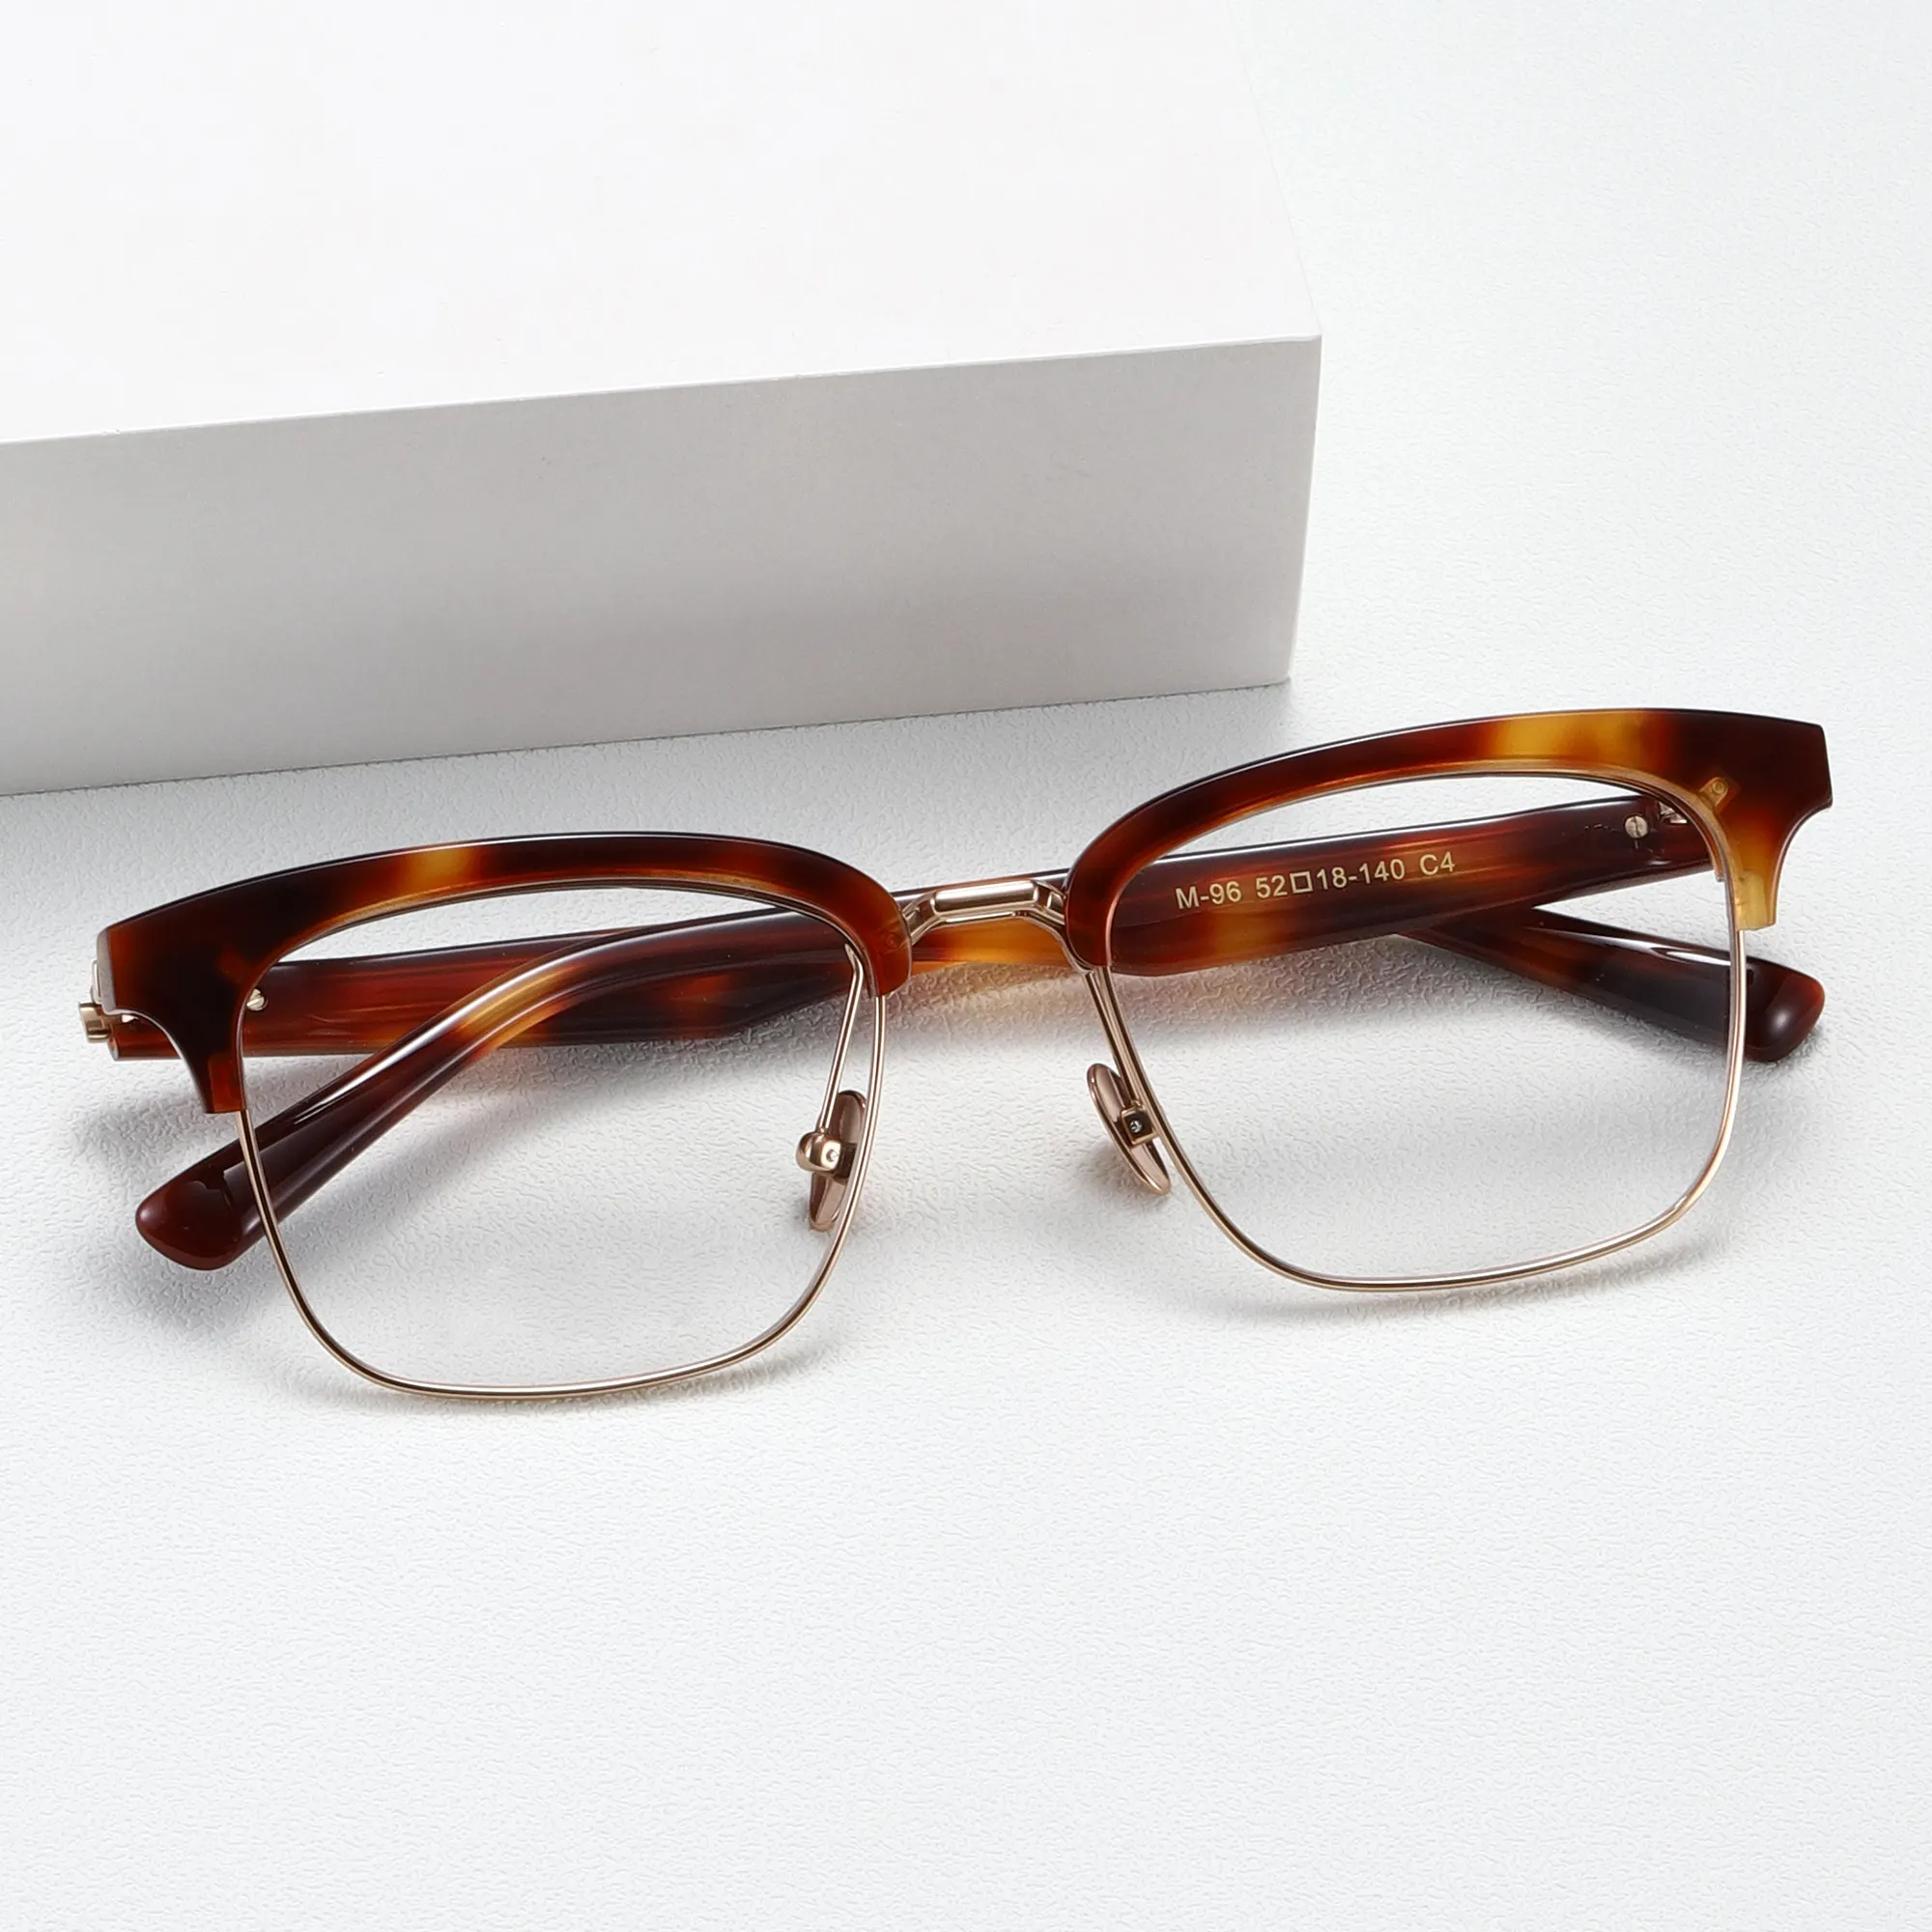 Figroad Shenzhen Manufactures vintage eyeglasses metal optical frame fashion luxury half frame eyewear frame for men